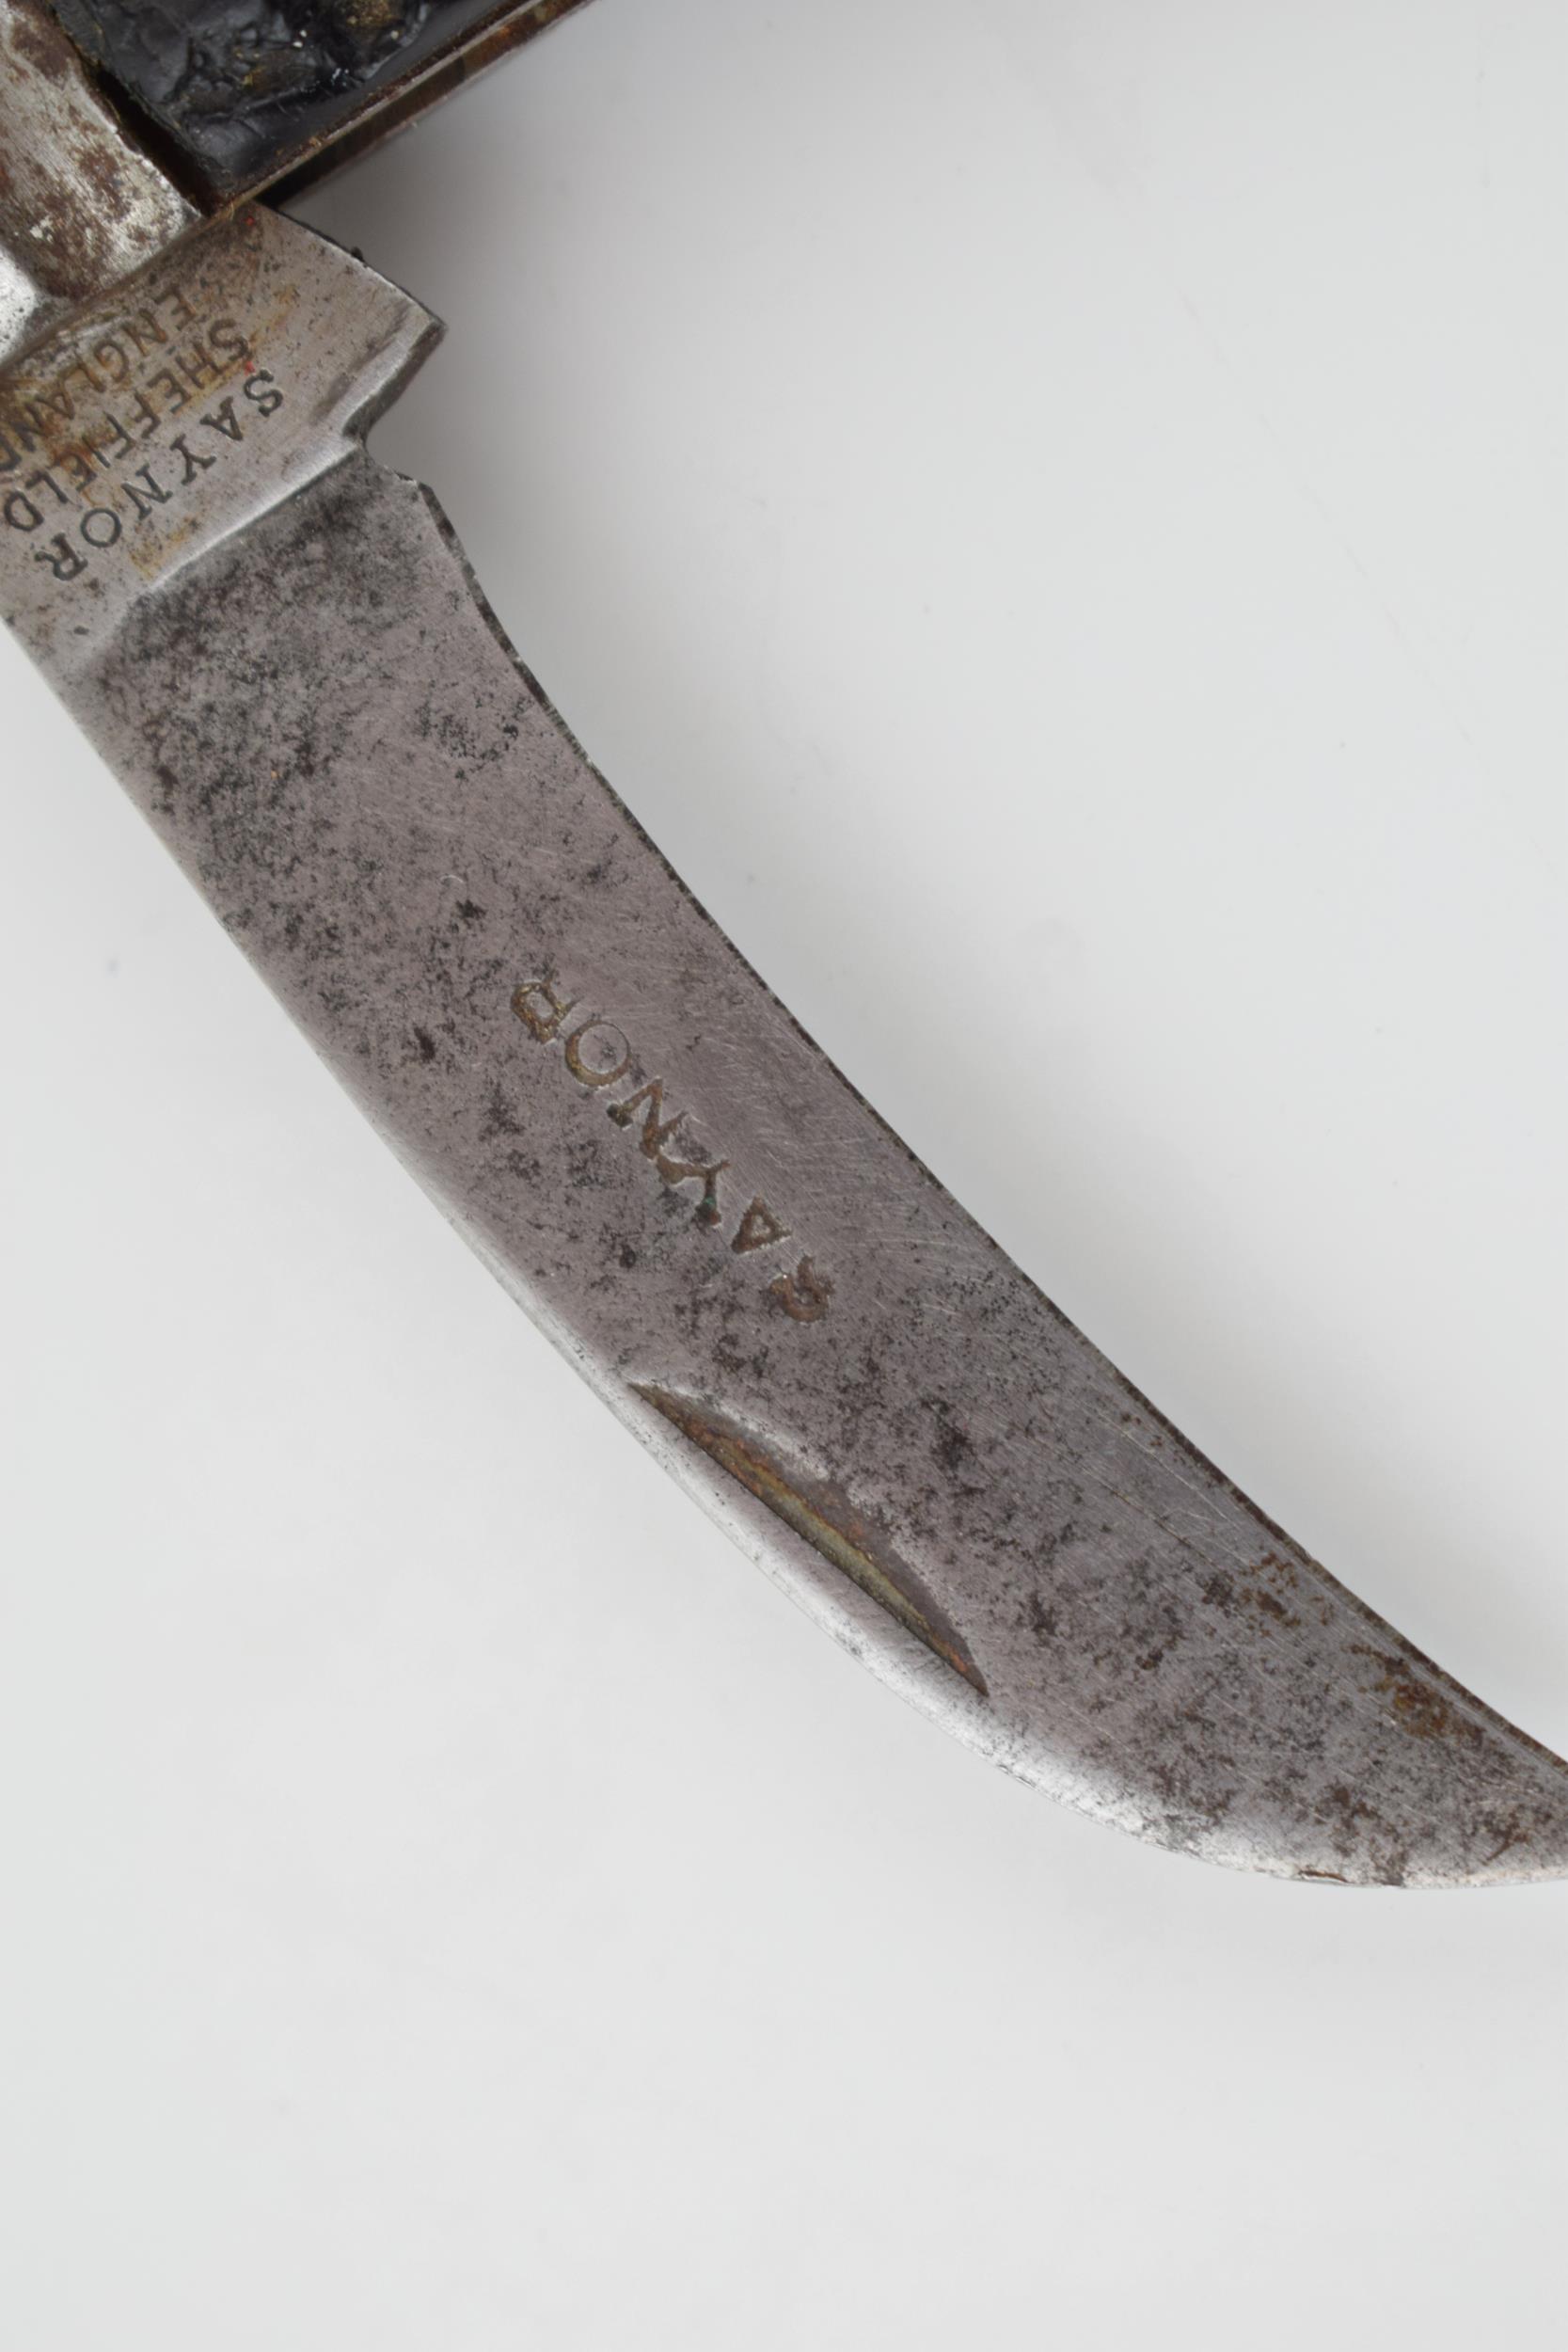 Saynor Sheffield Bone Handle Flat Cap Folding Pocket Knife Pruner c1900 10cm closed 17.5cm open - Image 4 of 7